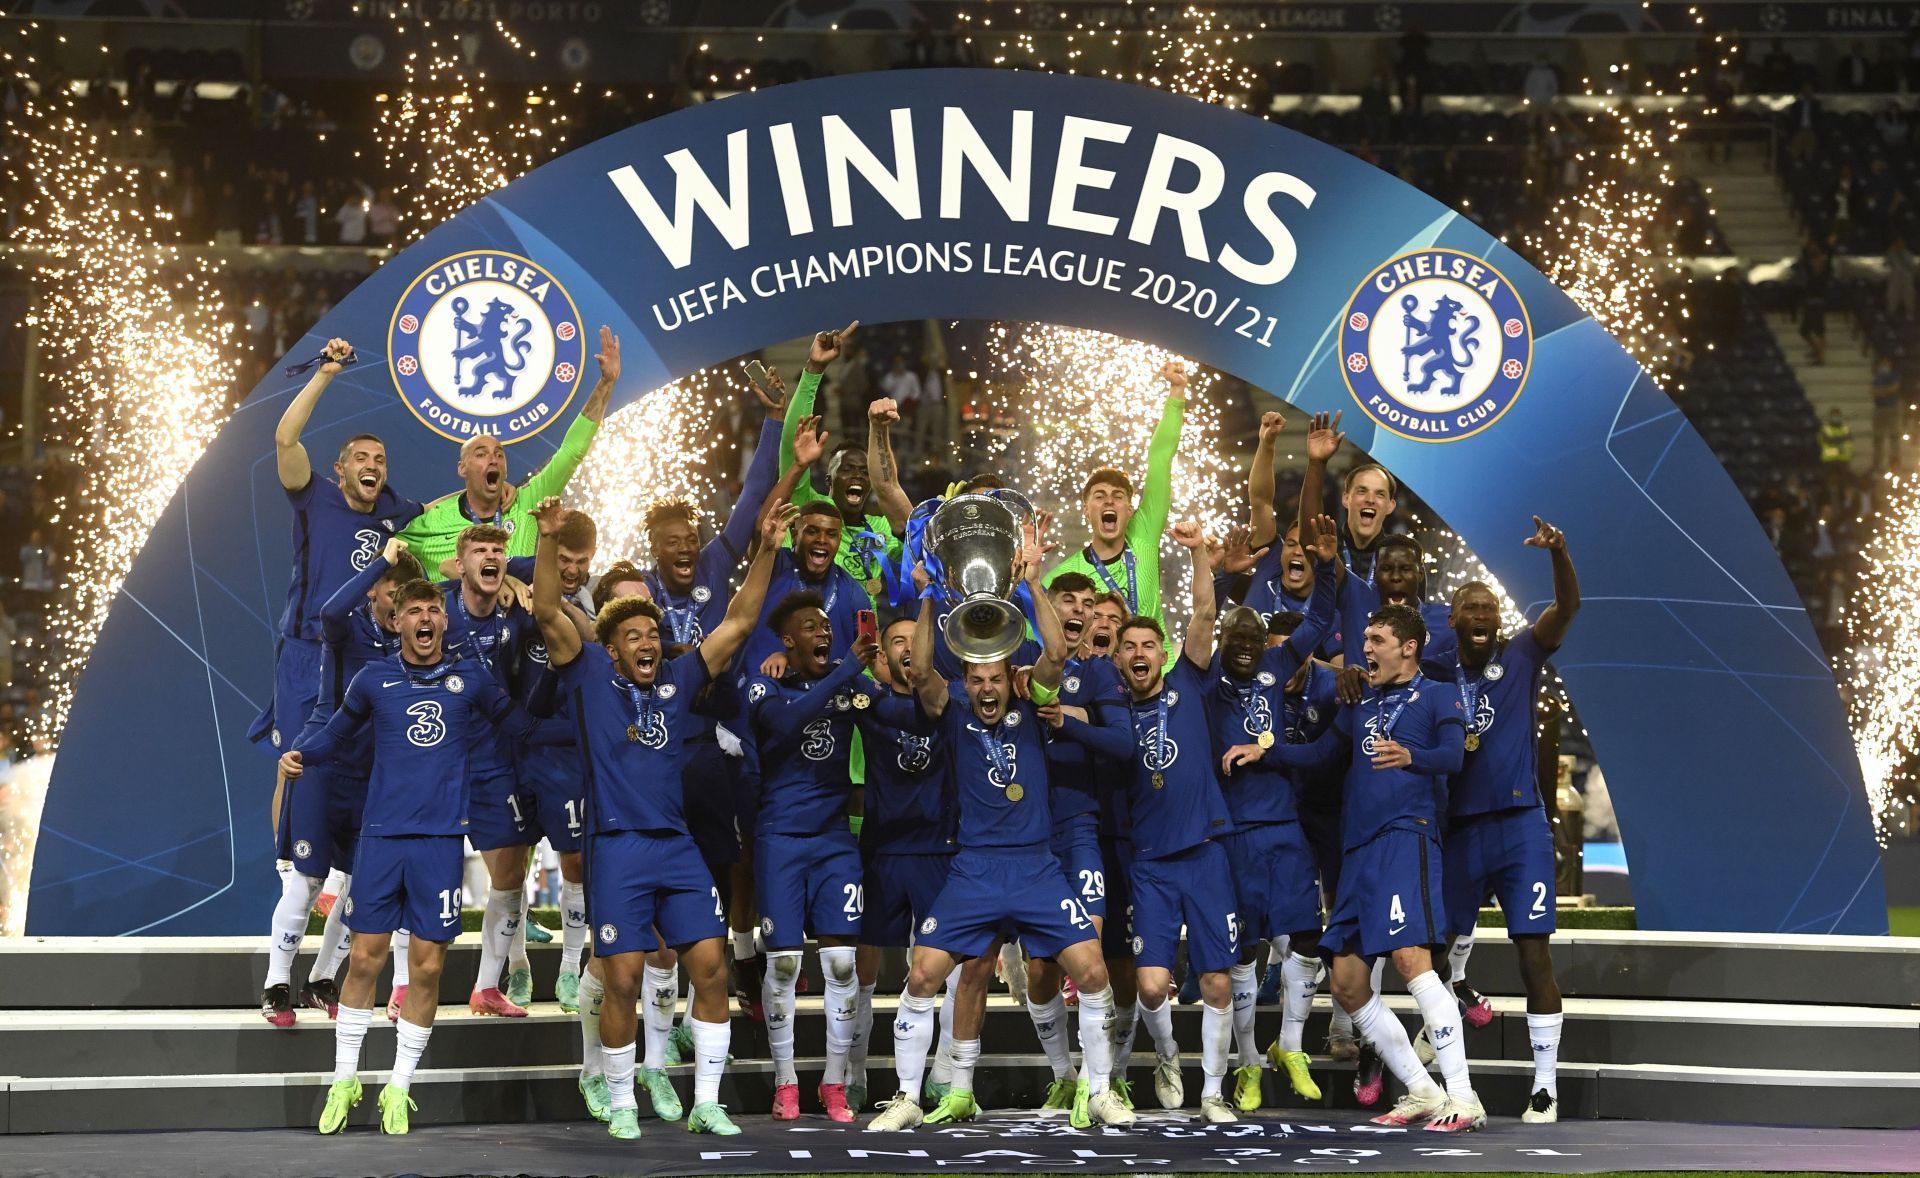 Chelsea won the Champions League last season.